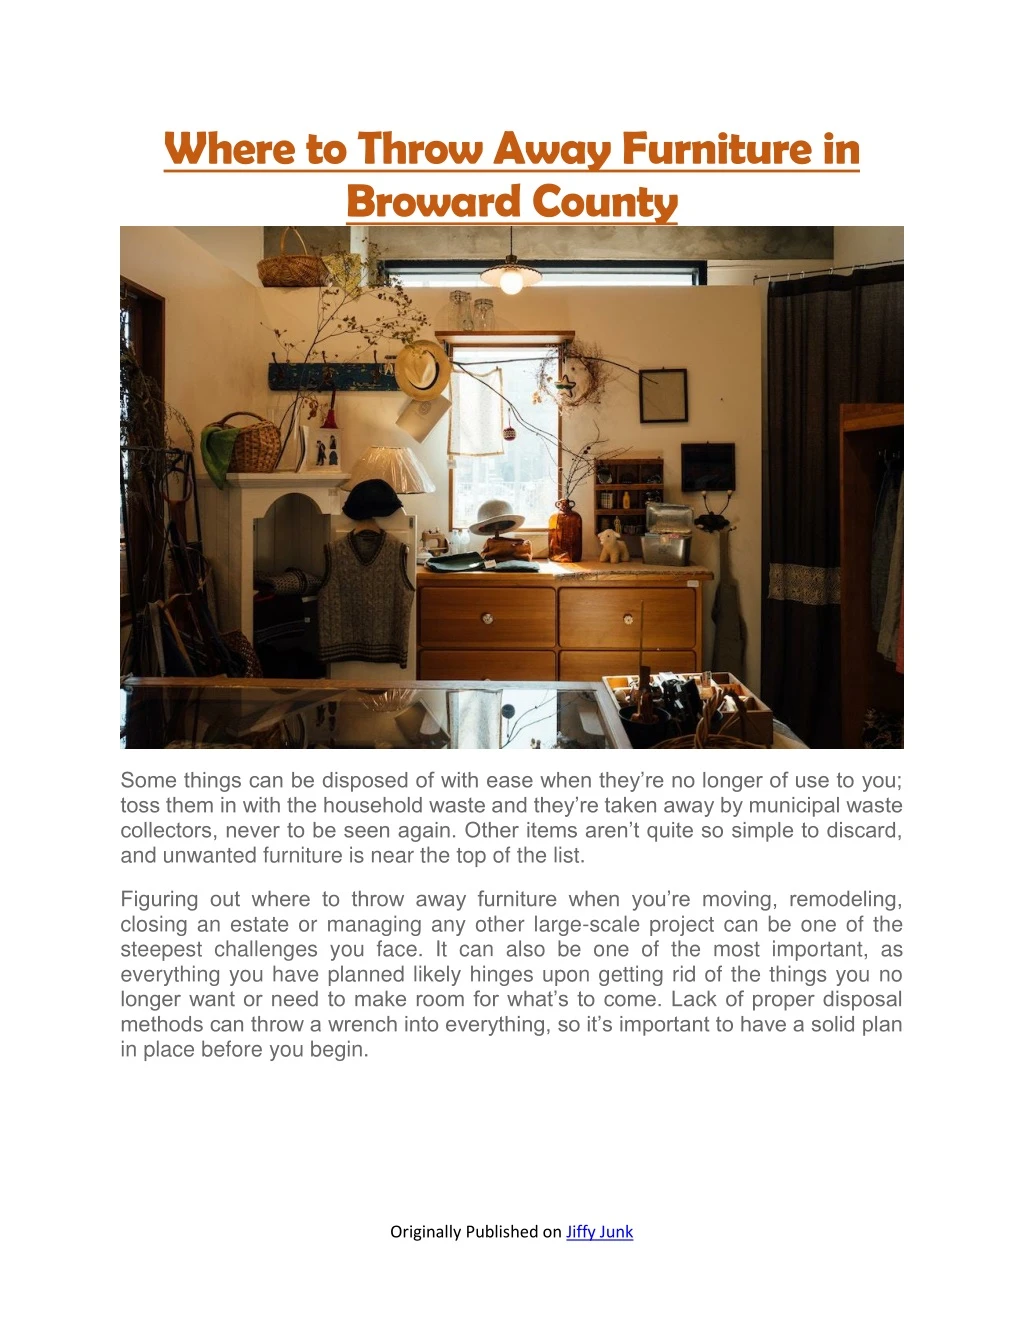 where to throw away furniture in broward county